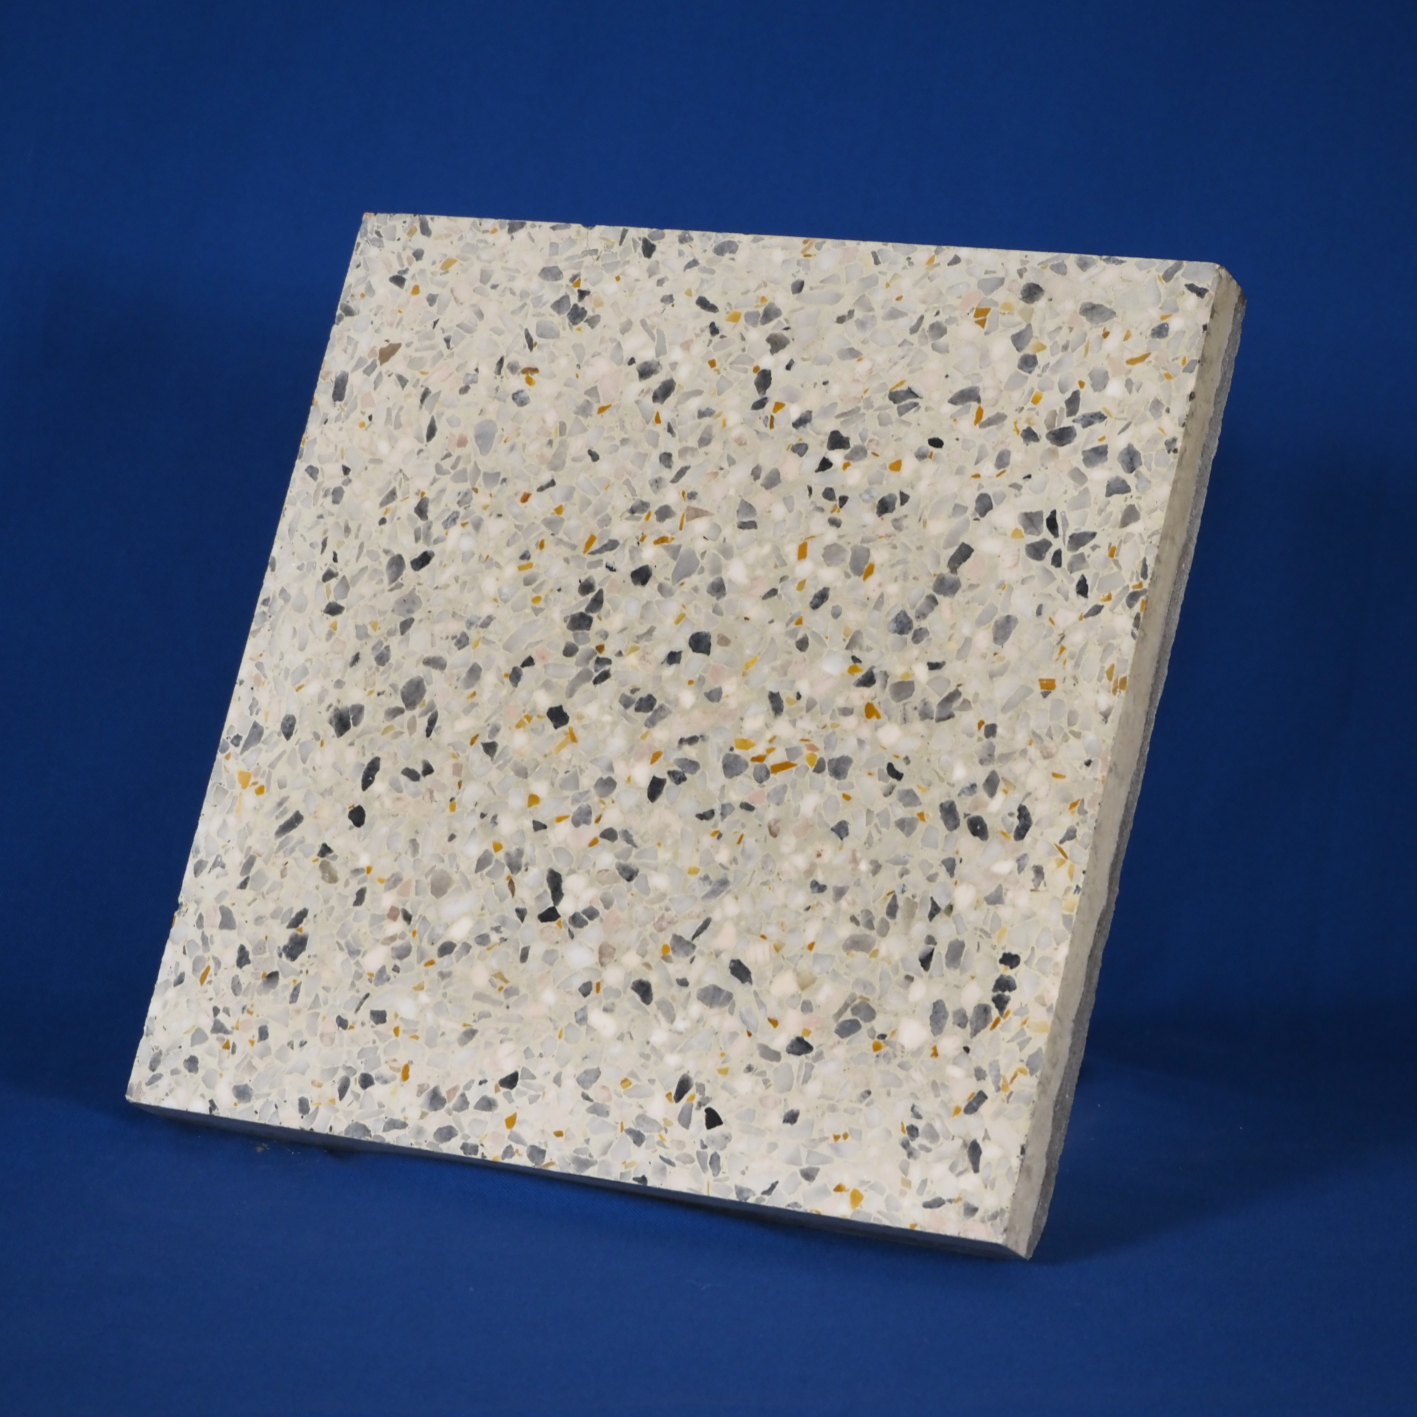 Terrazzo 'Oviglio' floor tiles (30 x 30 cm) - Sold per pallet